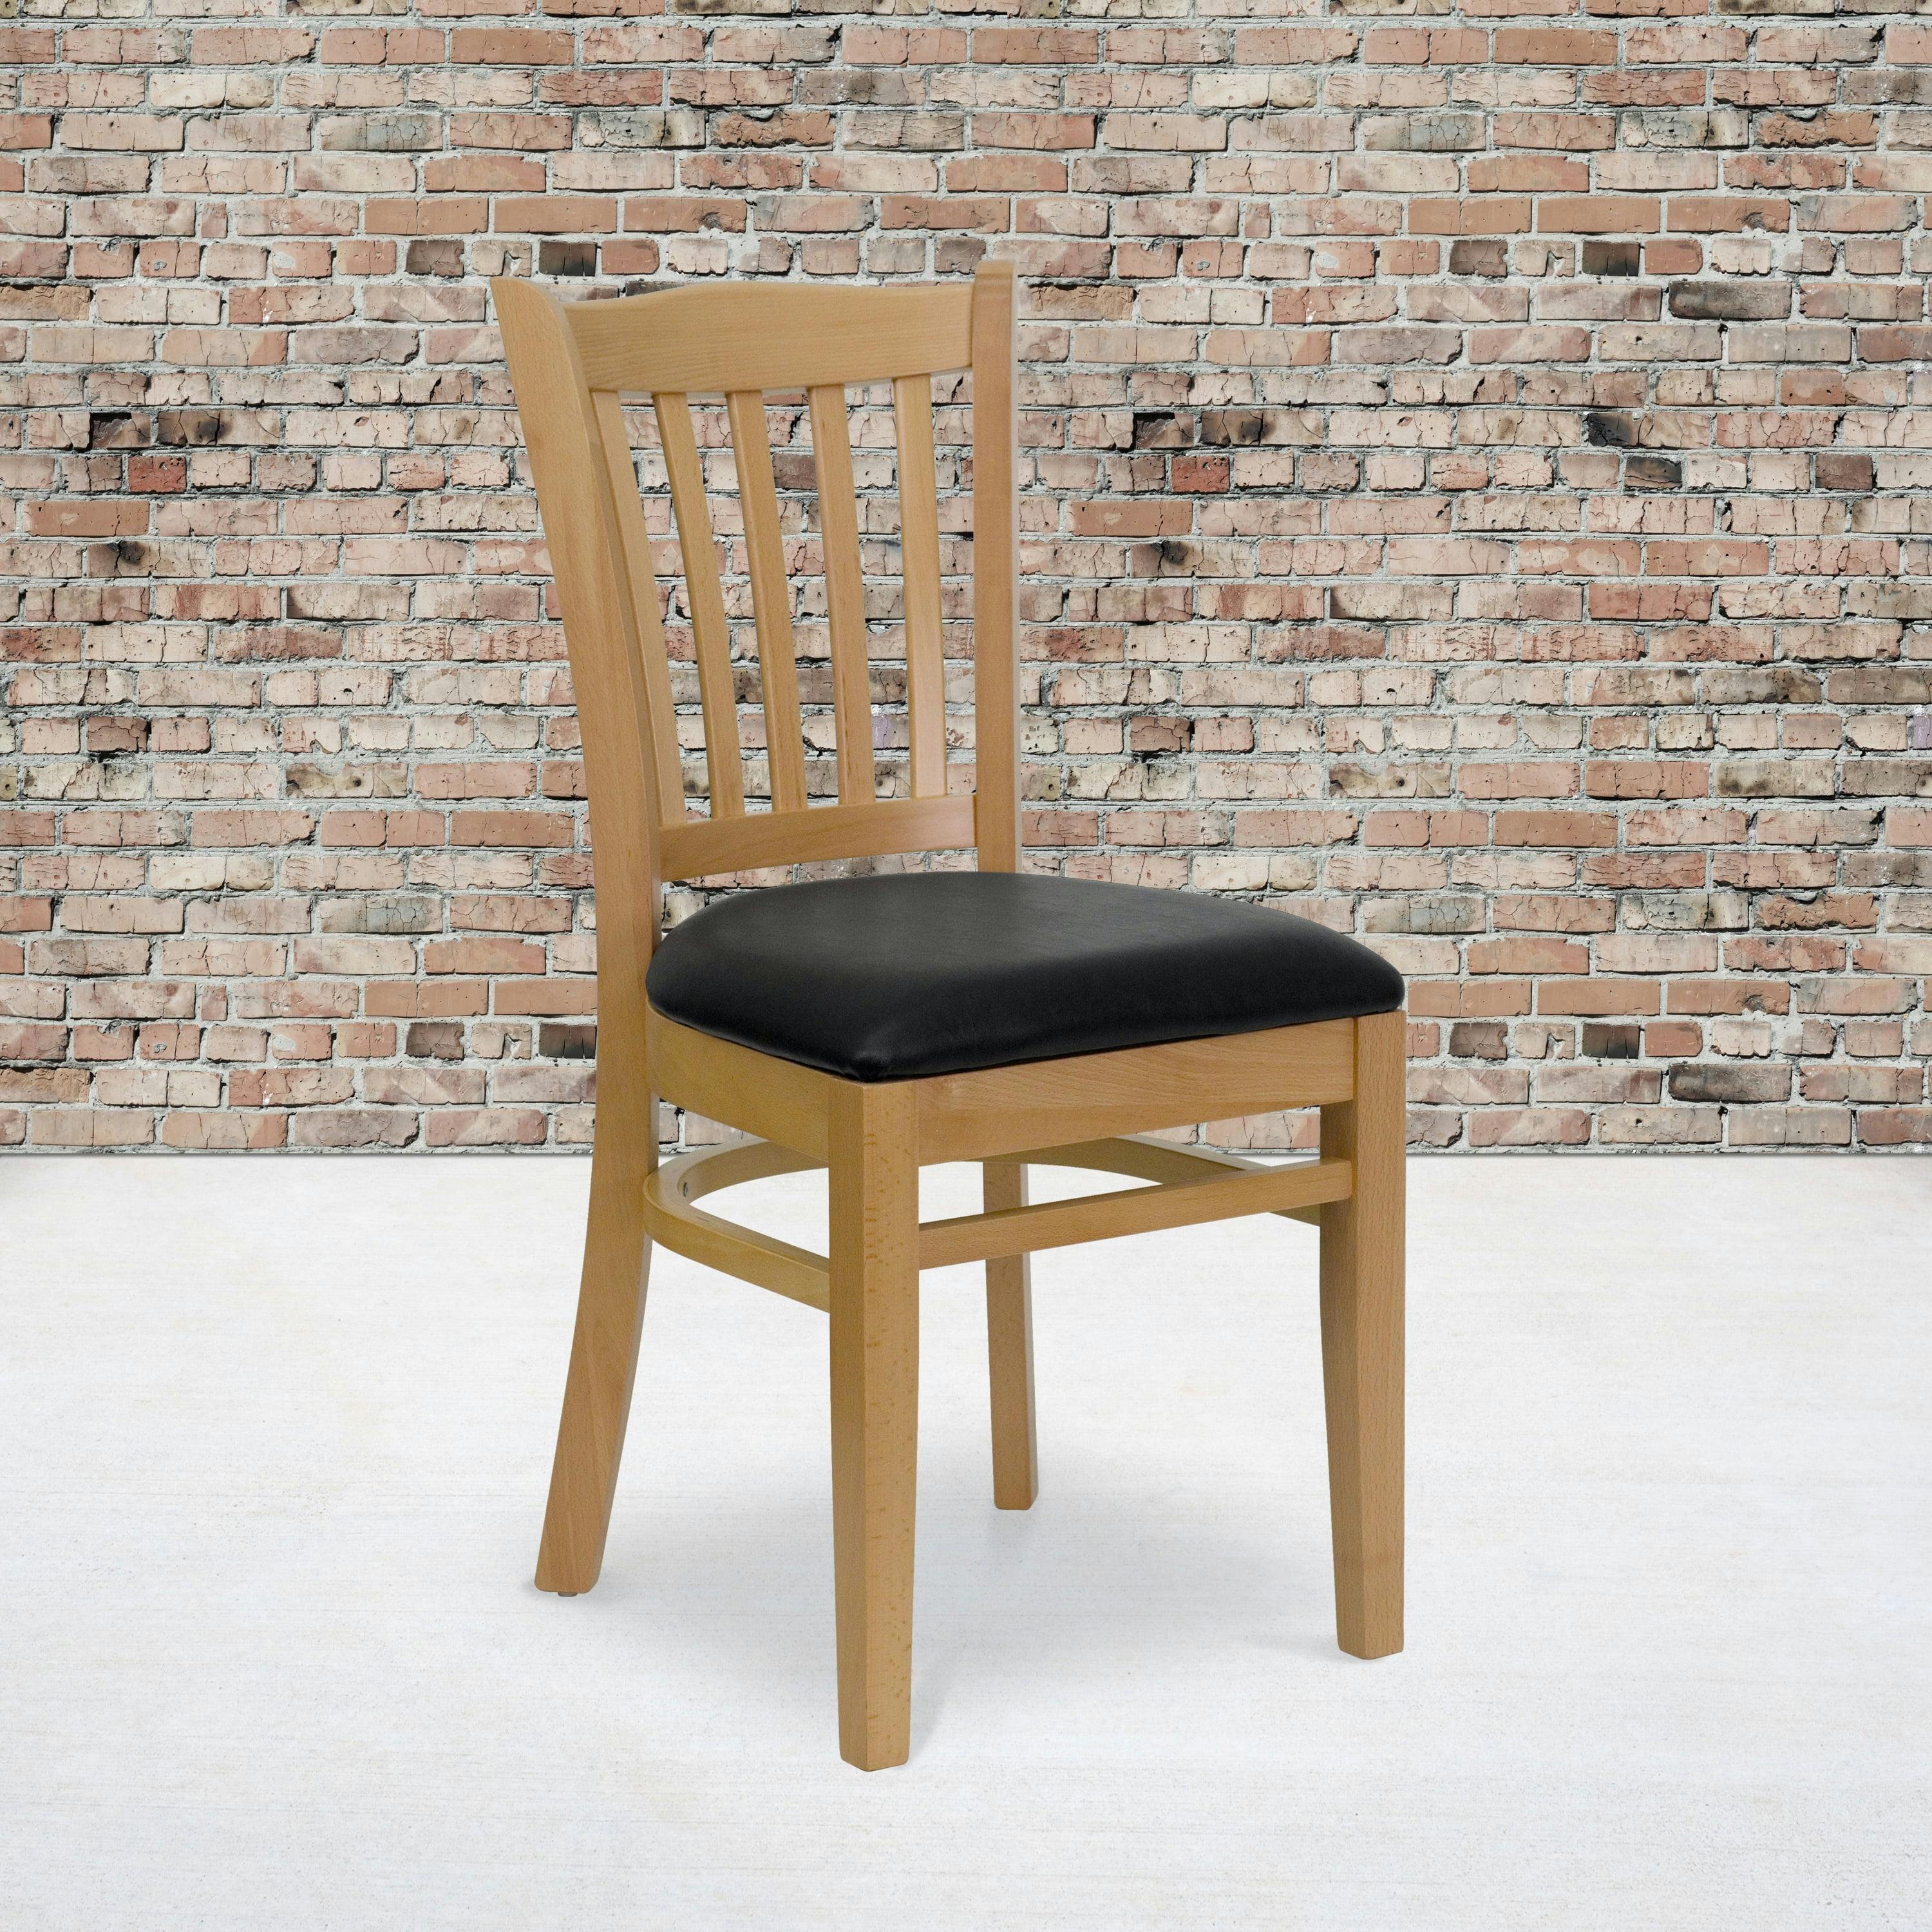 Elegant Windsor High Slat Side Chair in Natural Wood with Black Vinyl Seat